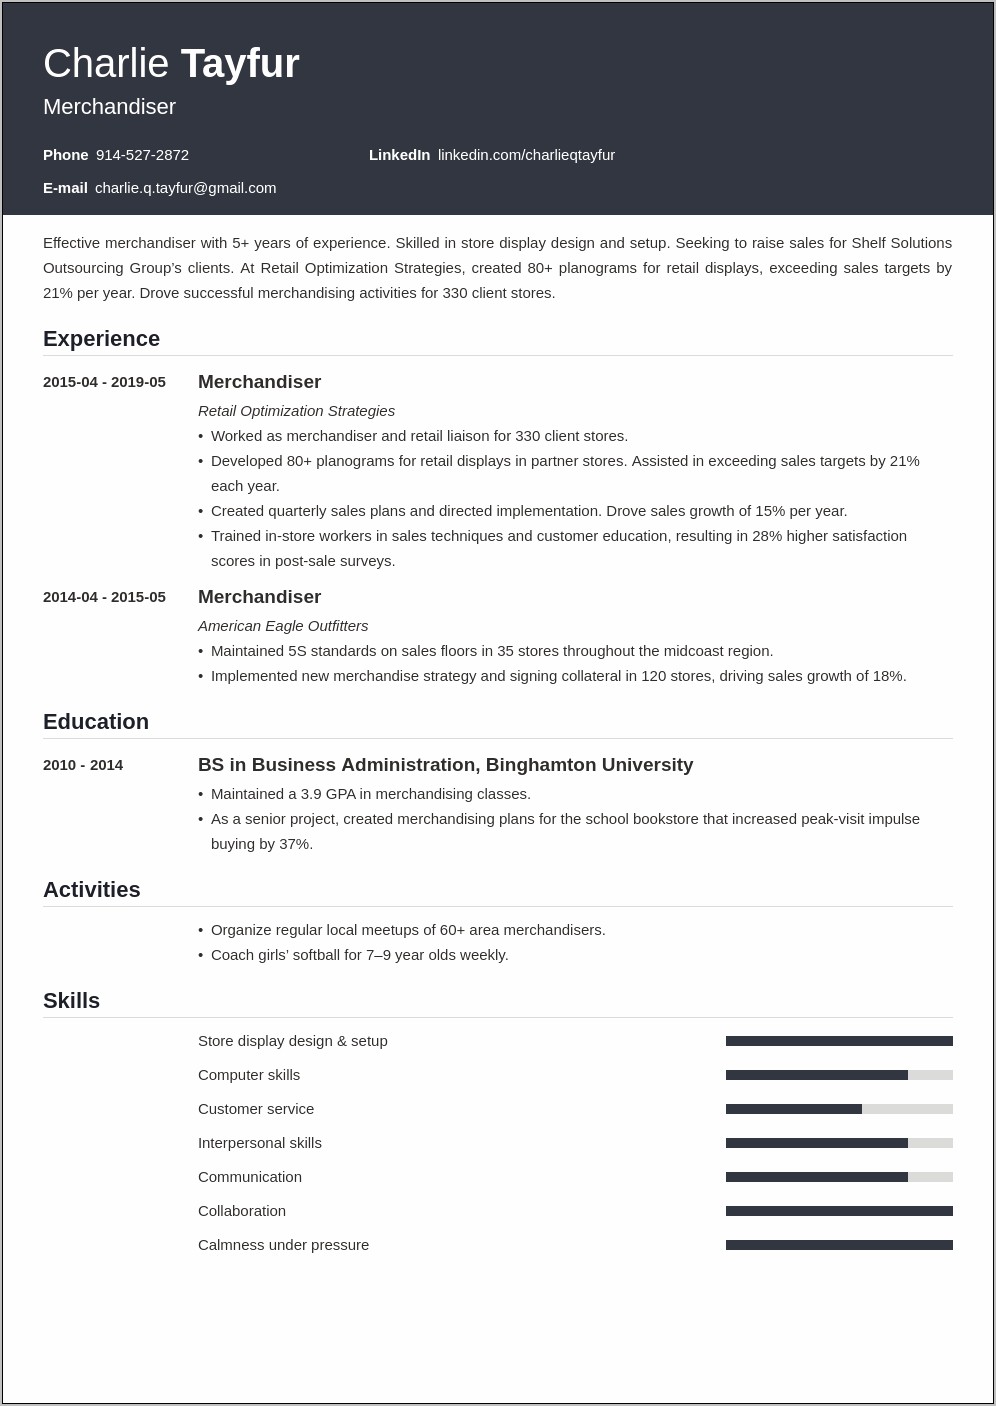 Merchant Job Description For Resume